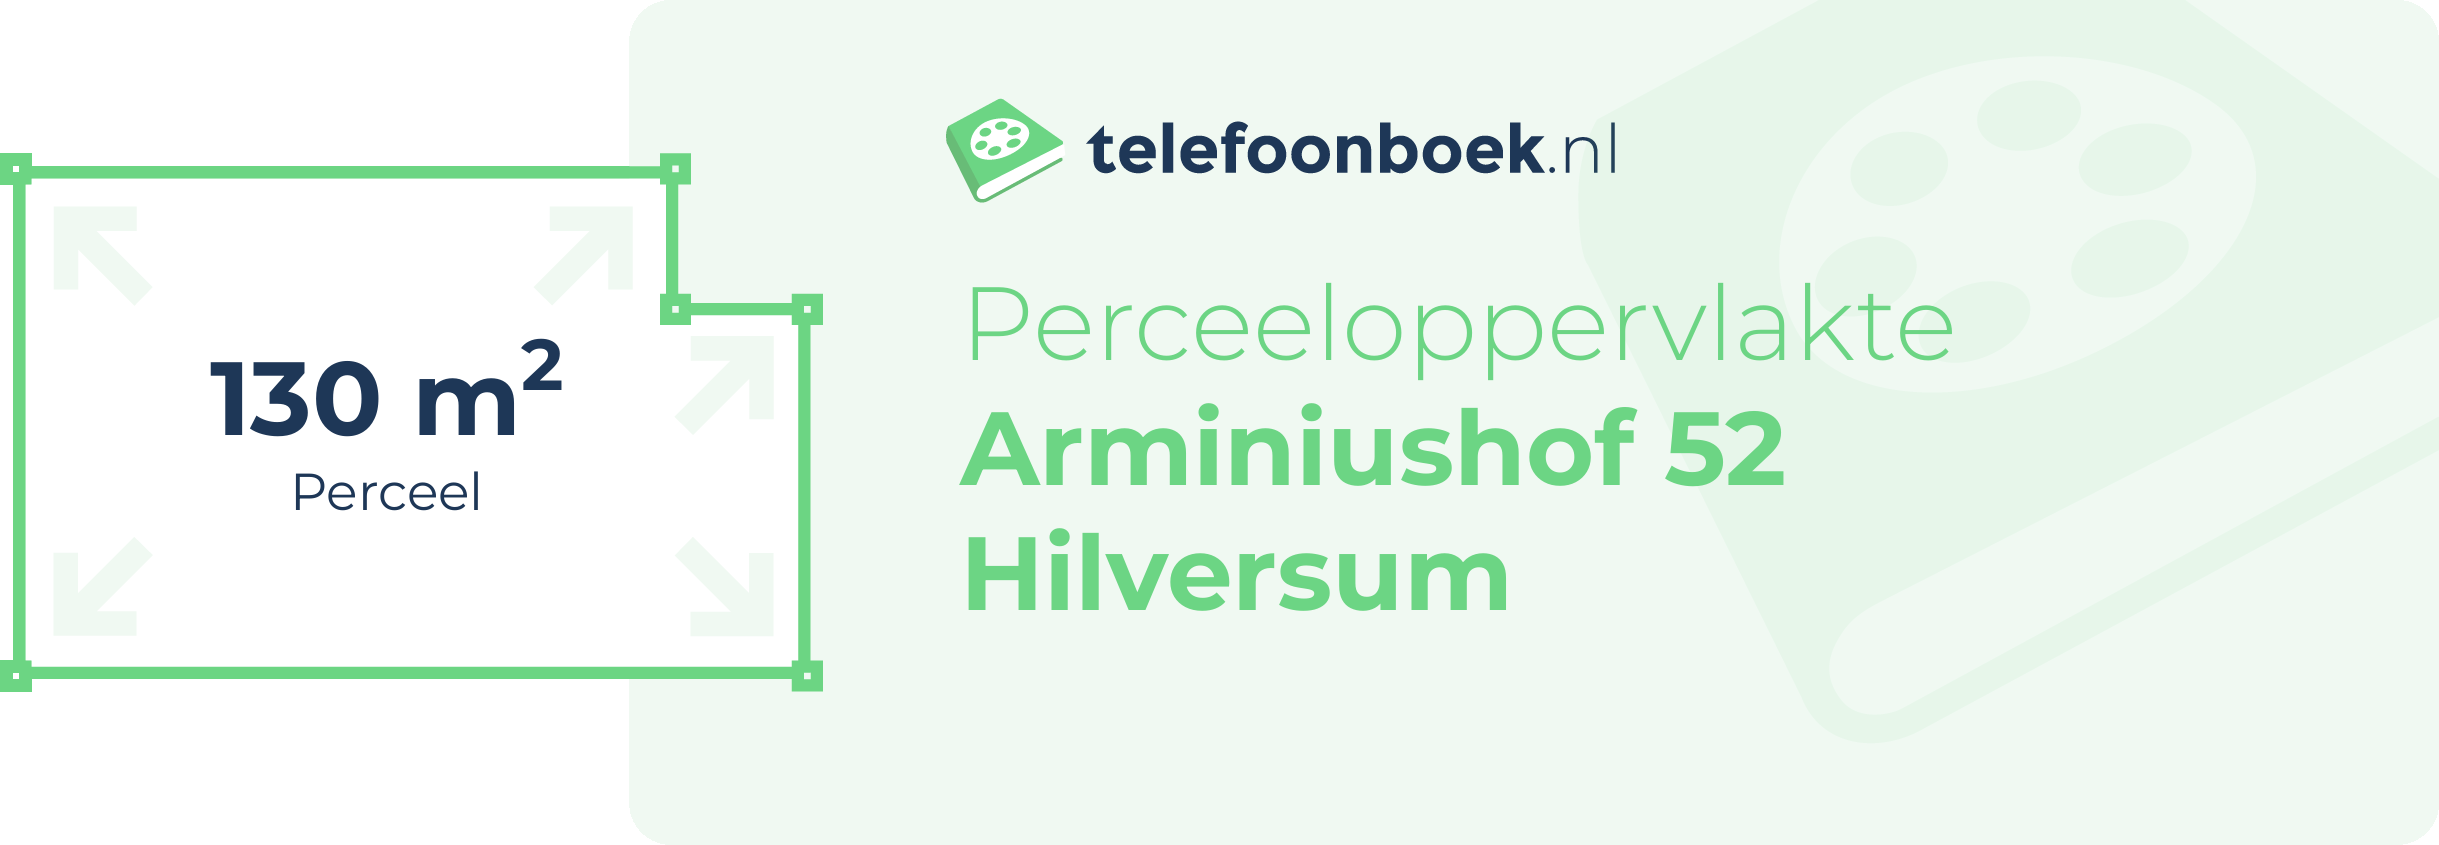 Perceeloppervlakte Arminiushof 52 Hilversum